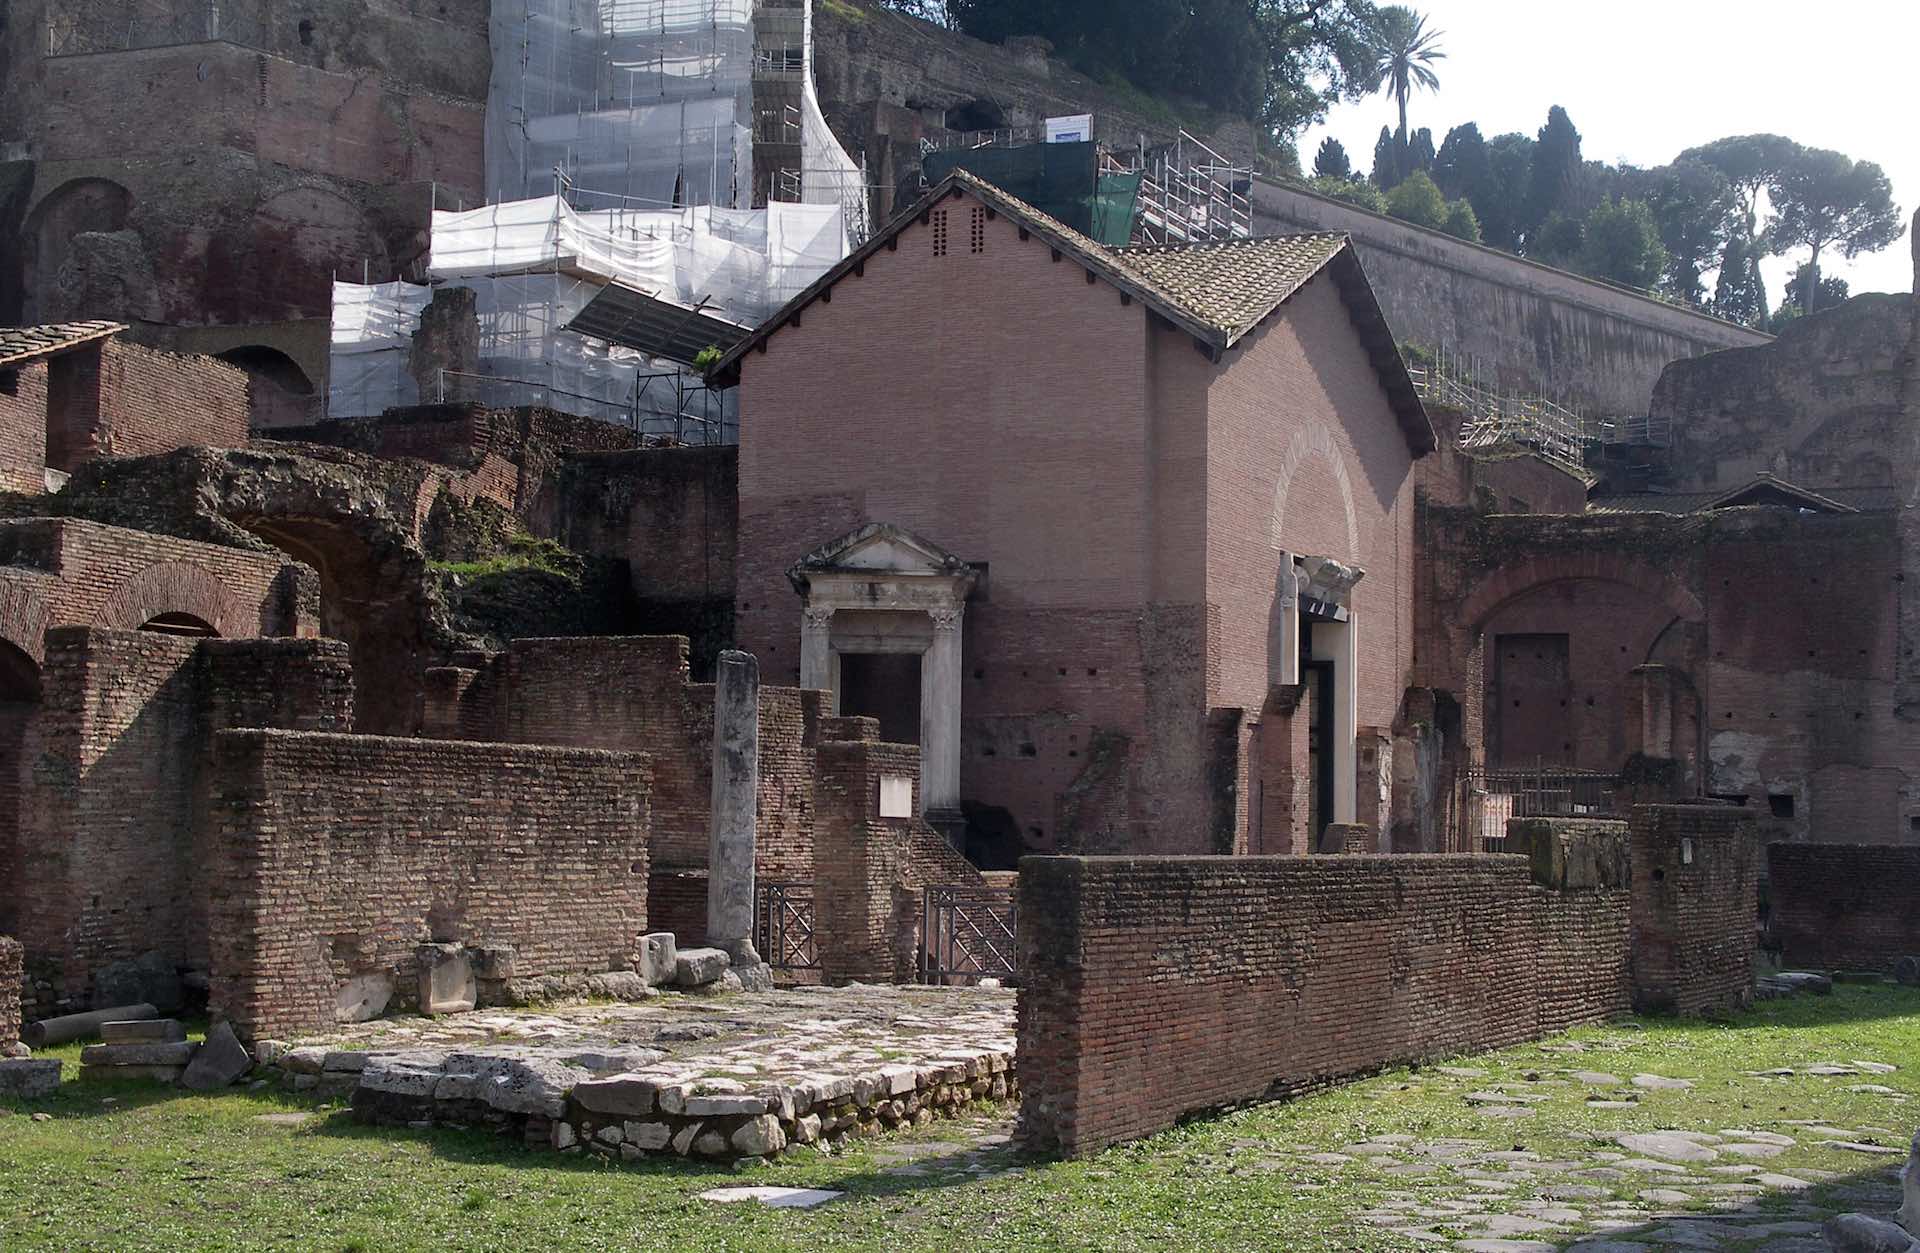 The restoration of the Santa Maria Antiqua